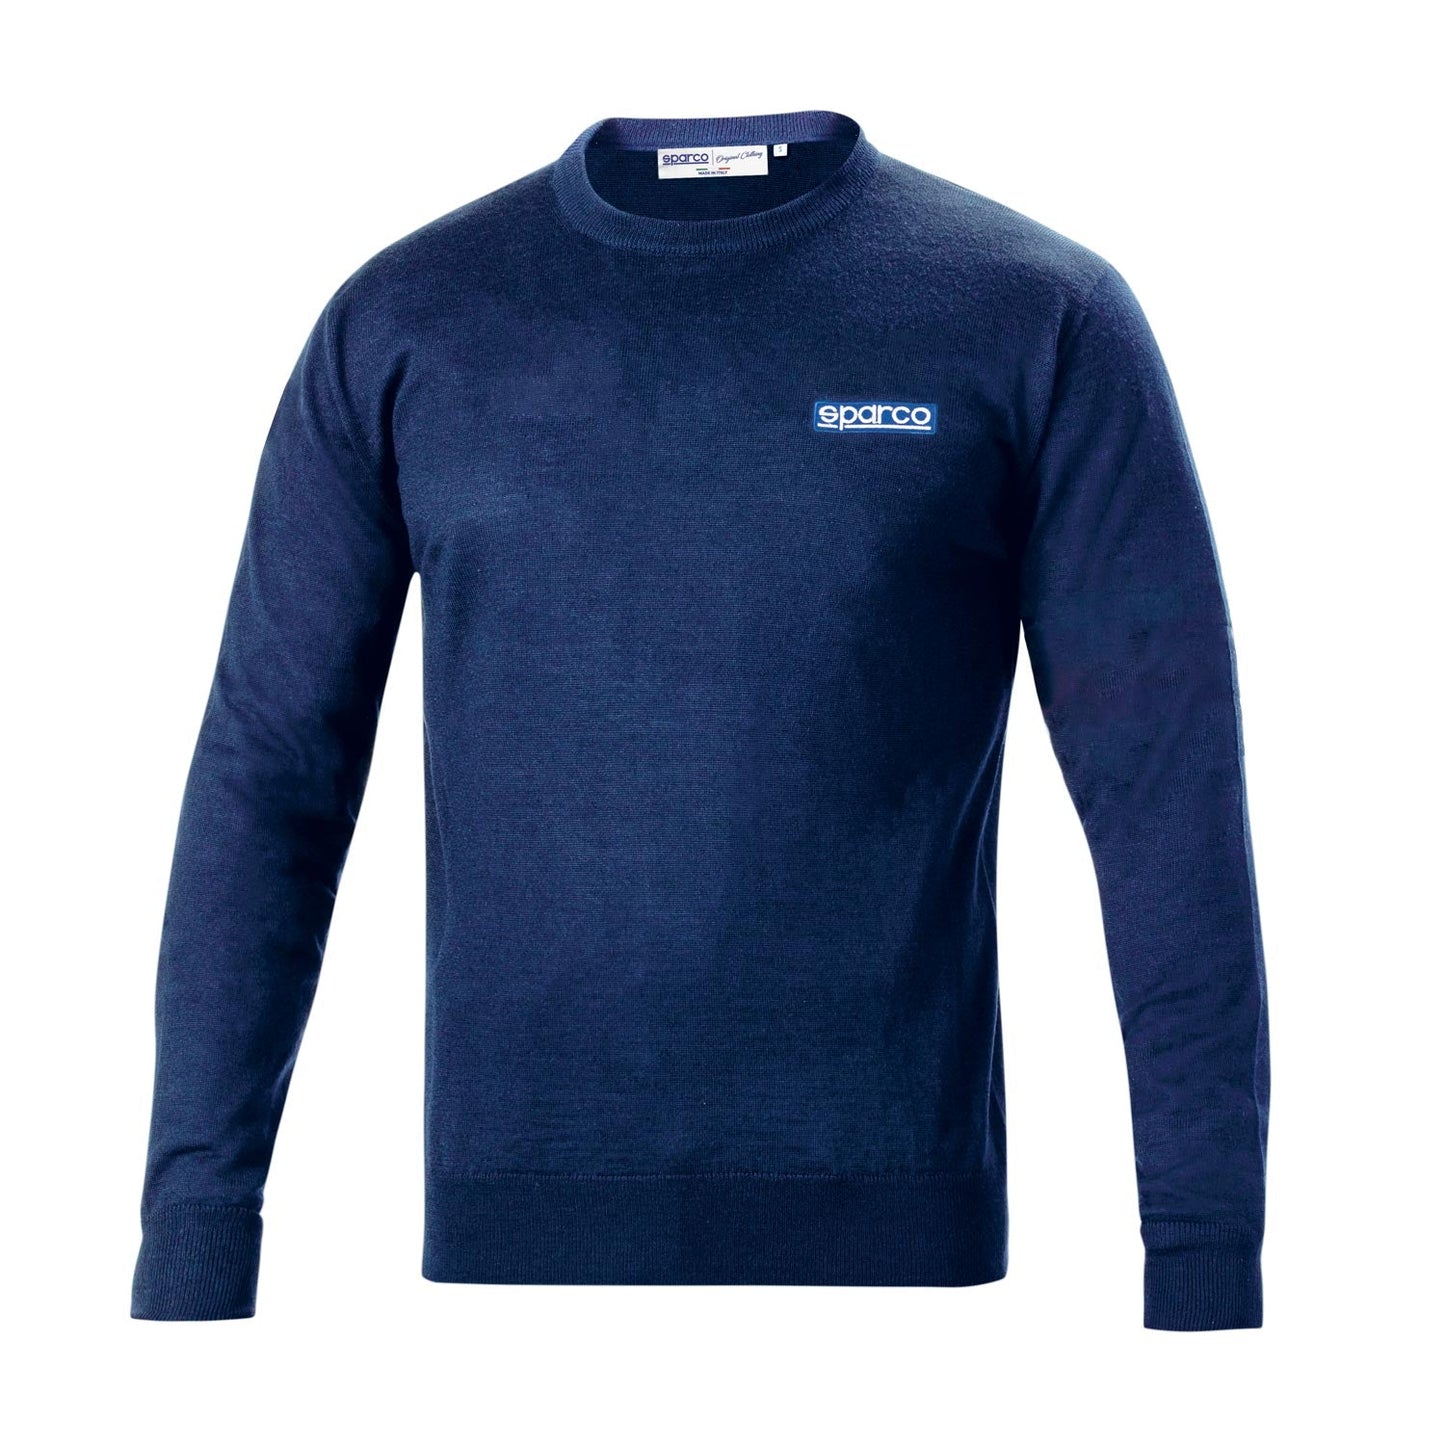 Sparco Italy Mens Crew Neck Sweatshirt navy blue